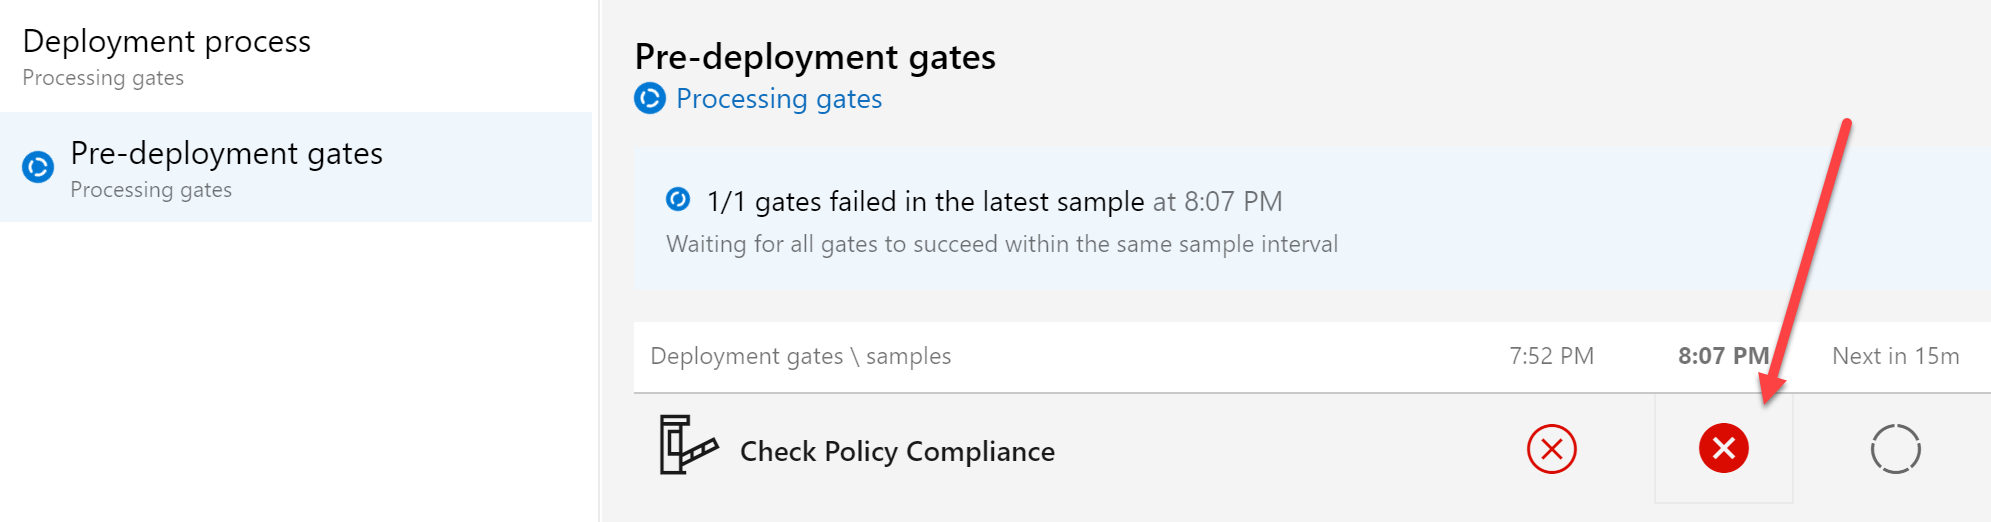 Processing Gates